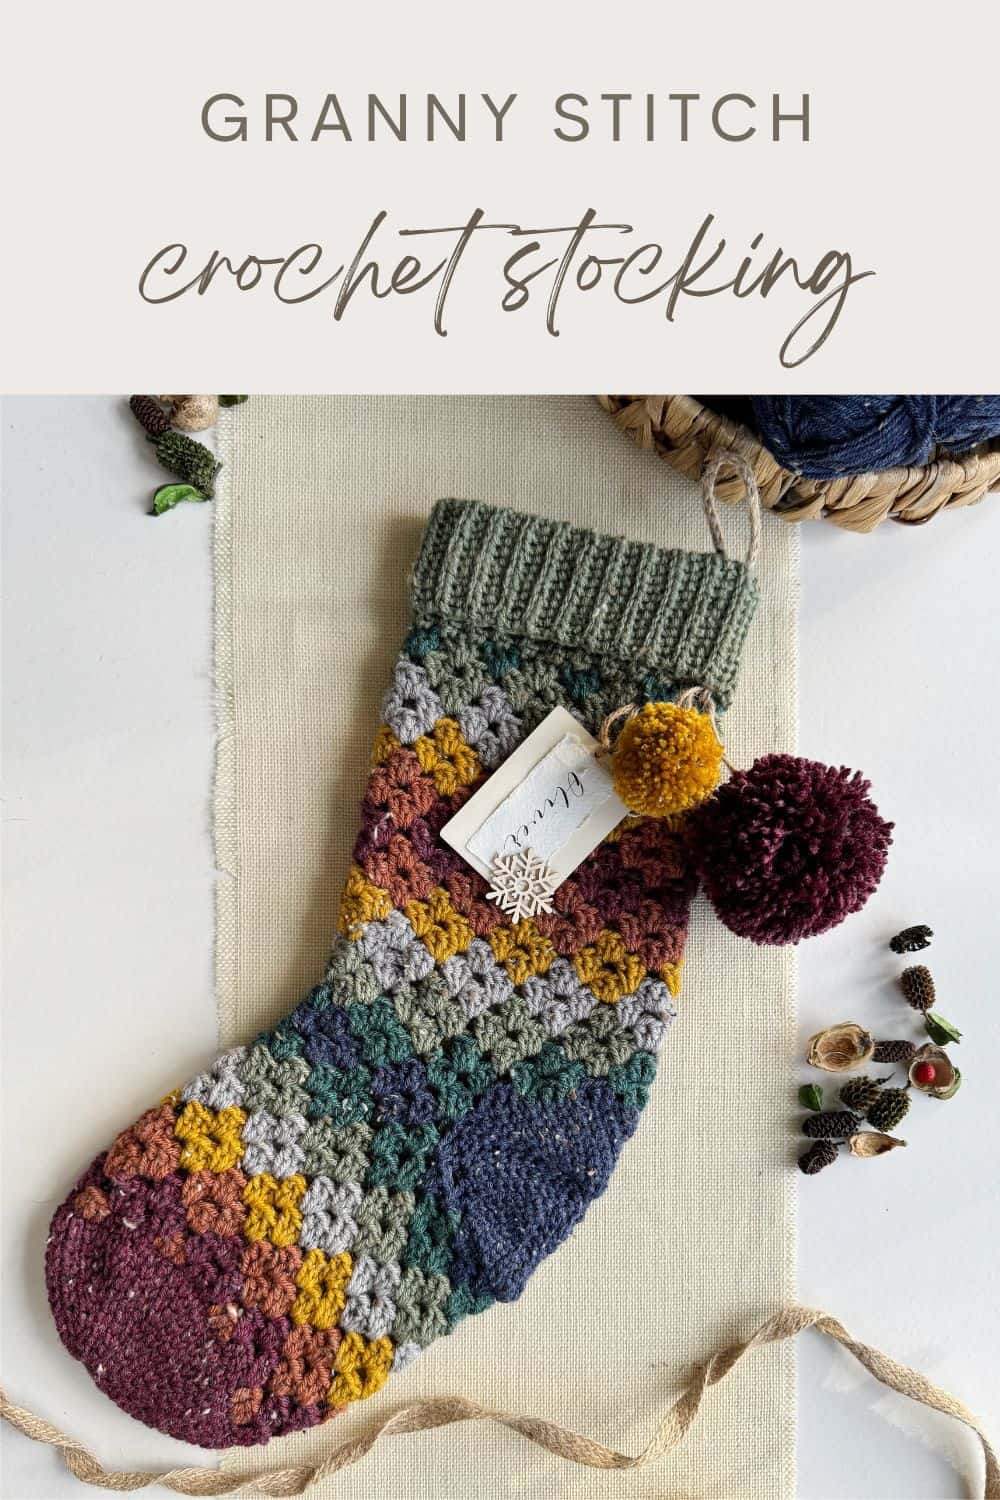 Granny stitch crochet stocking pattern.